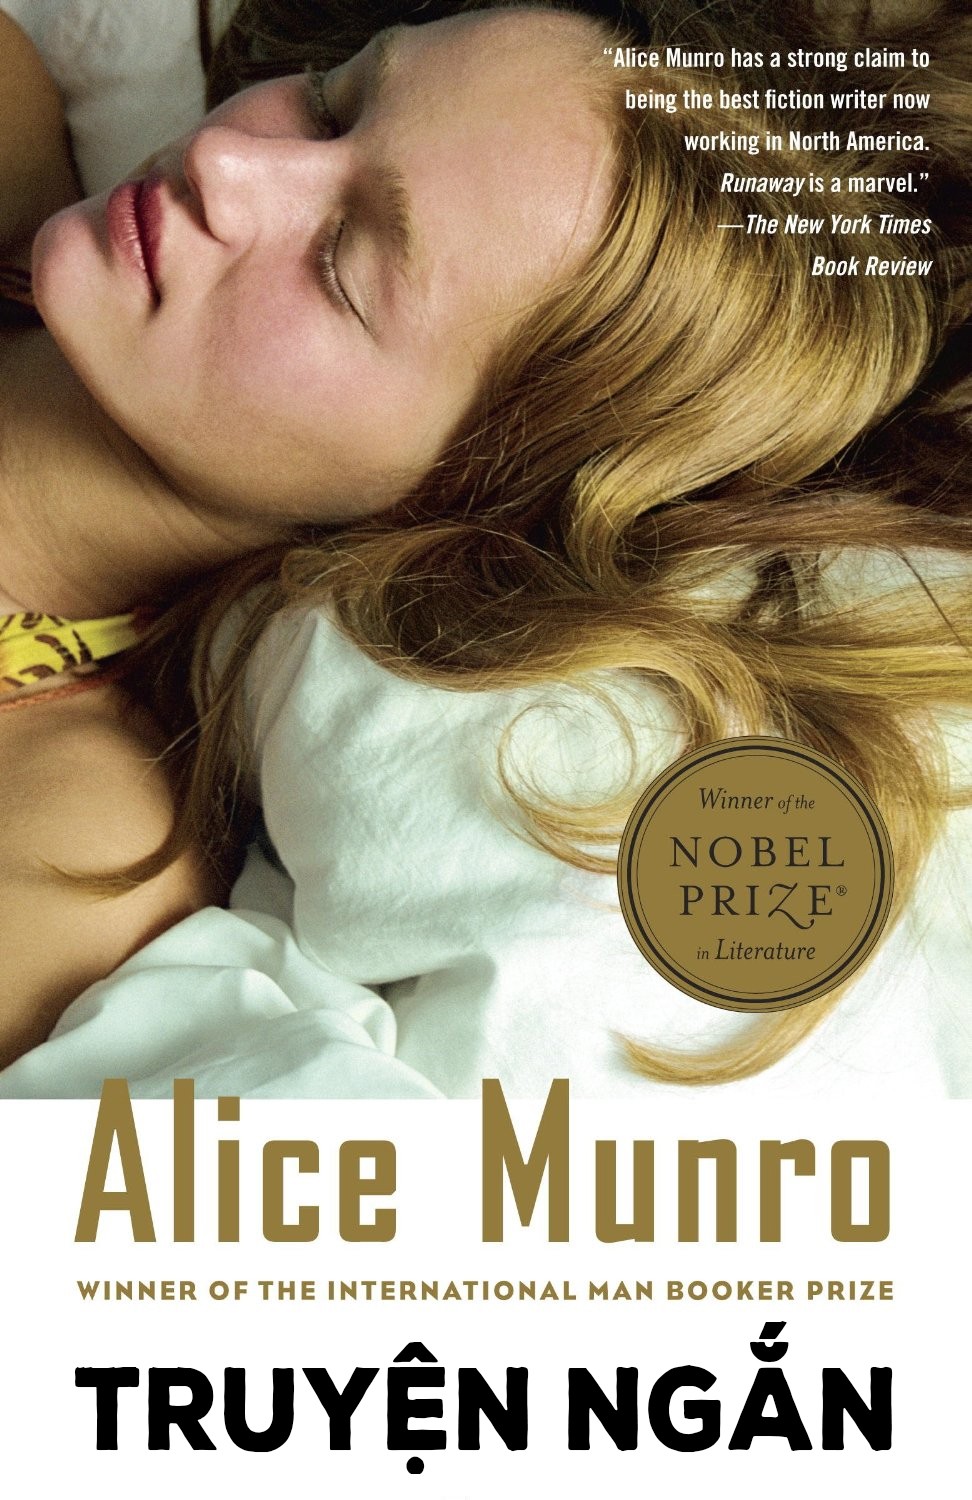 Truyện Ngắn Alice Munro